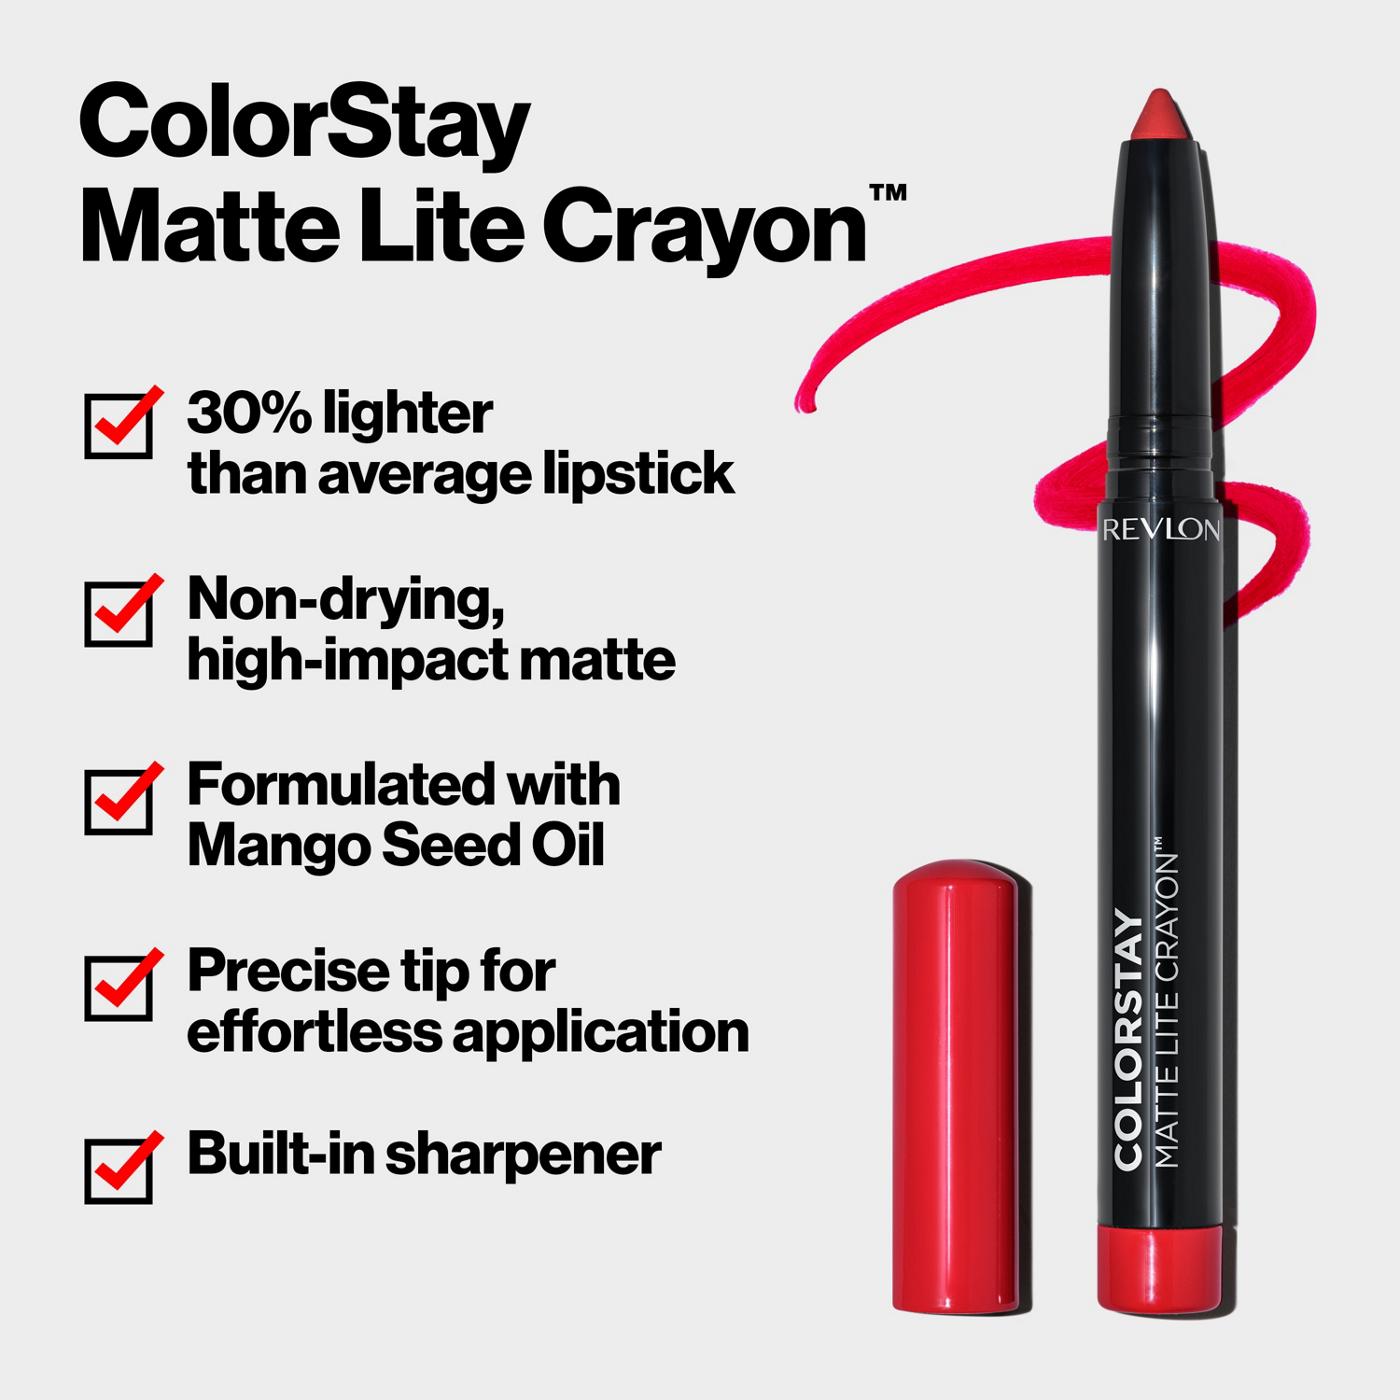 Revlon ColorStay Matte Lite Crayon Lipstick - Clear The Air; image 2 of 7